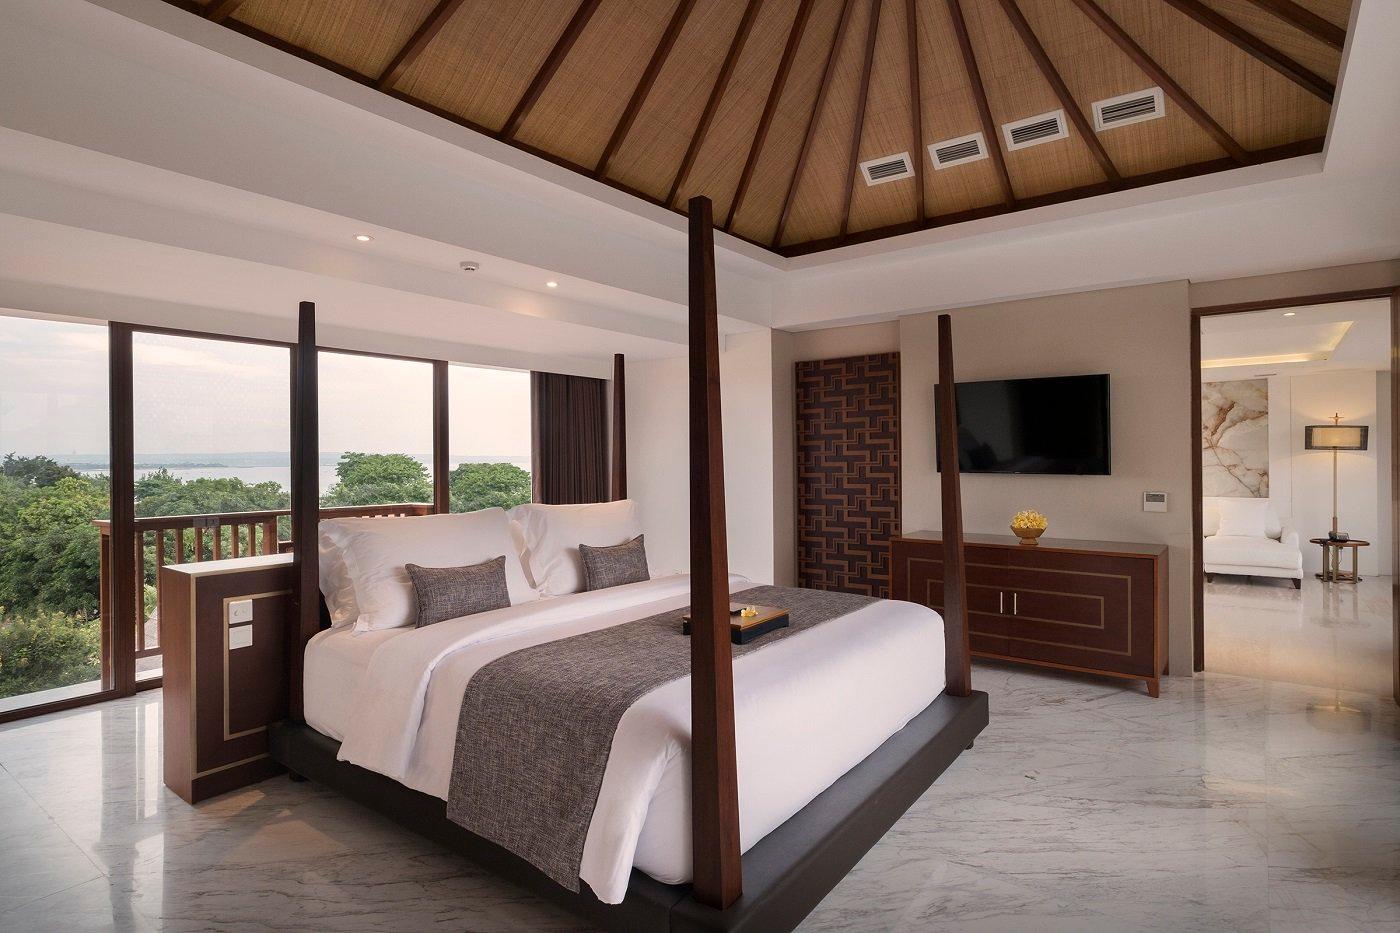 The Bandha Hotel Bedroom Royal Suites At The Bandh